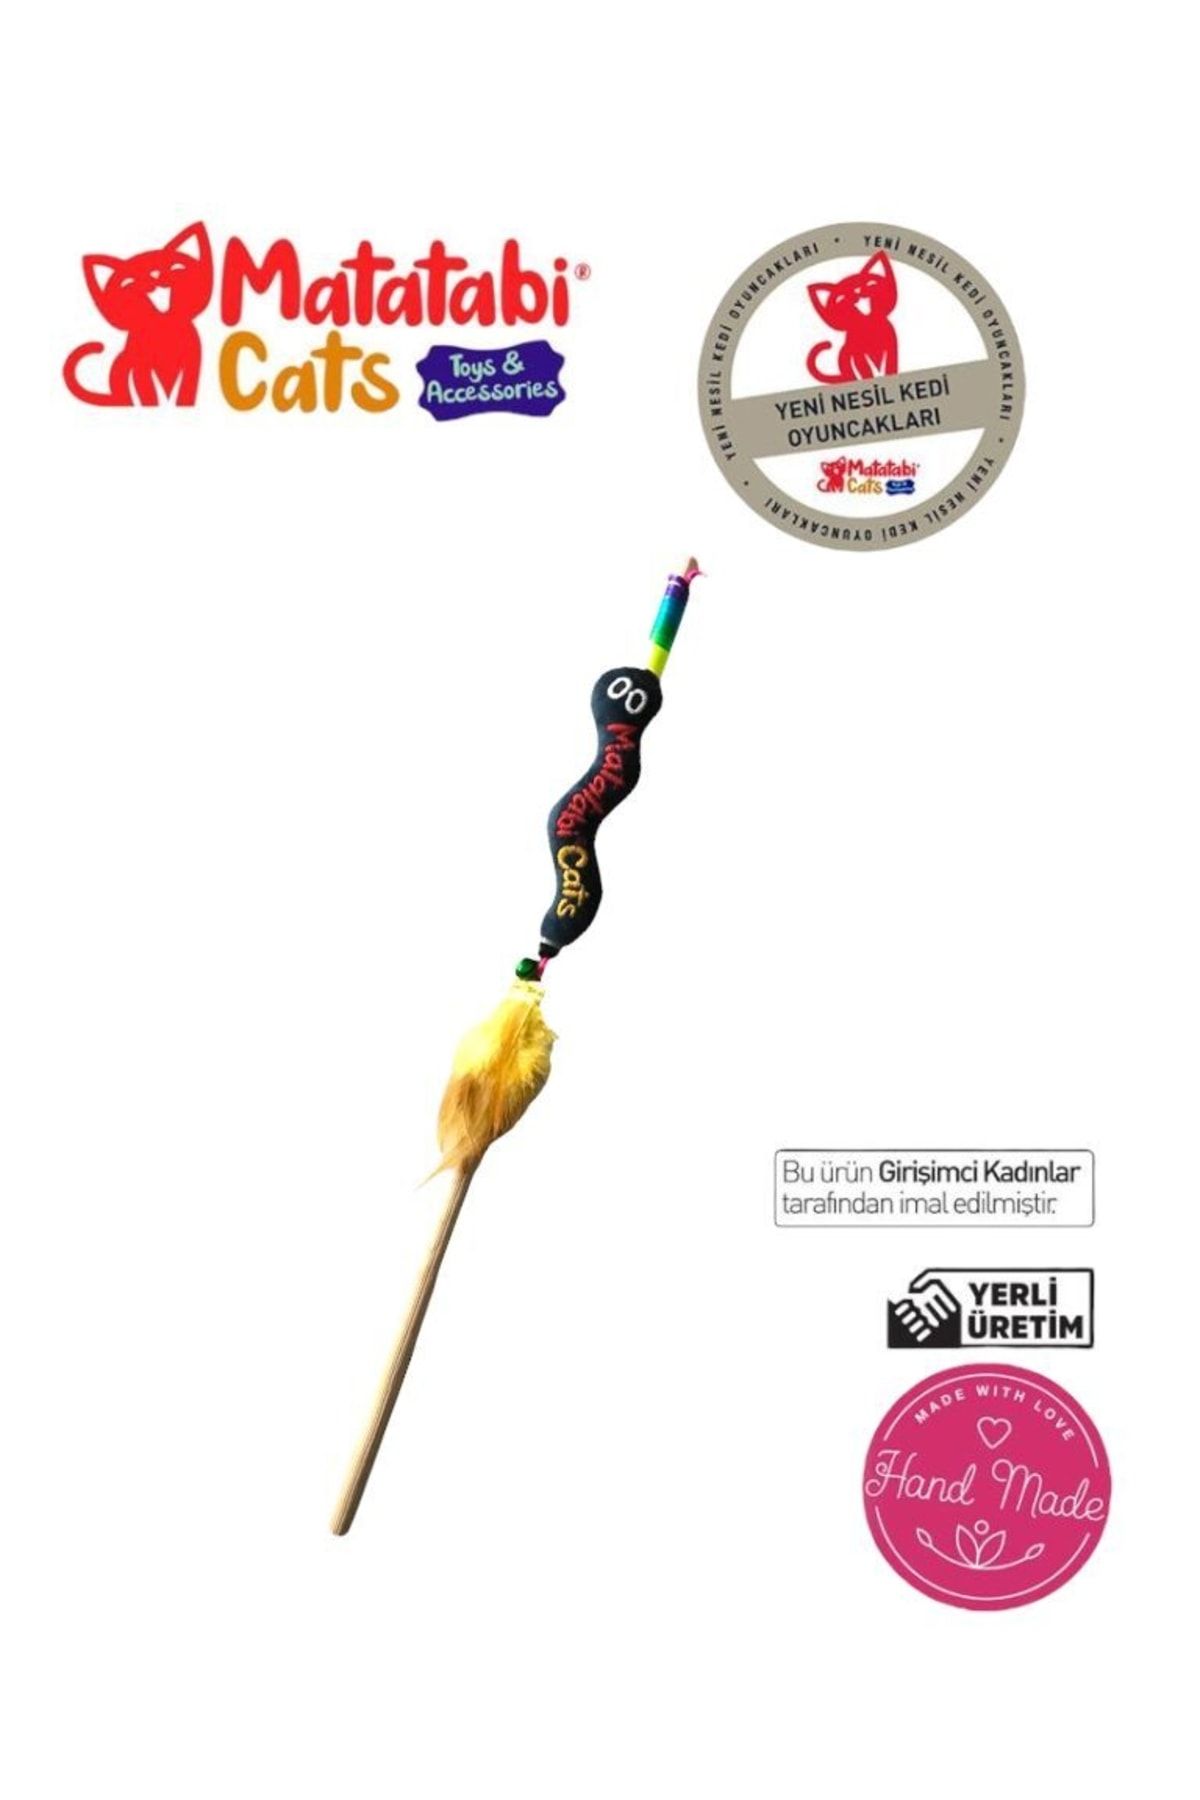 MATATABİ CATS Wormy Wooden Handled Cat Fishing Rod with Plush Cat Toy -  Matatabi Content - Trendyol